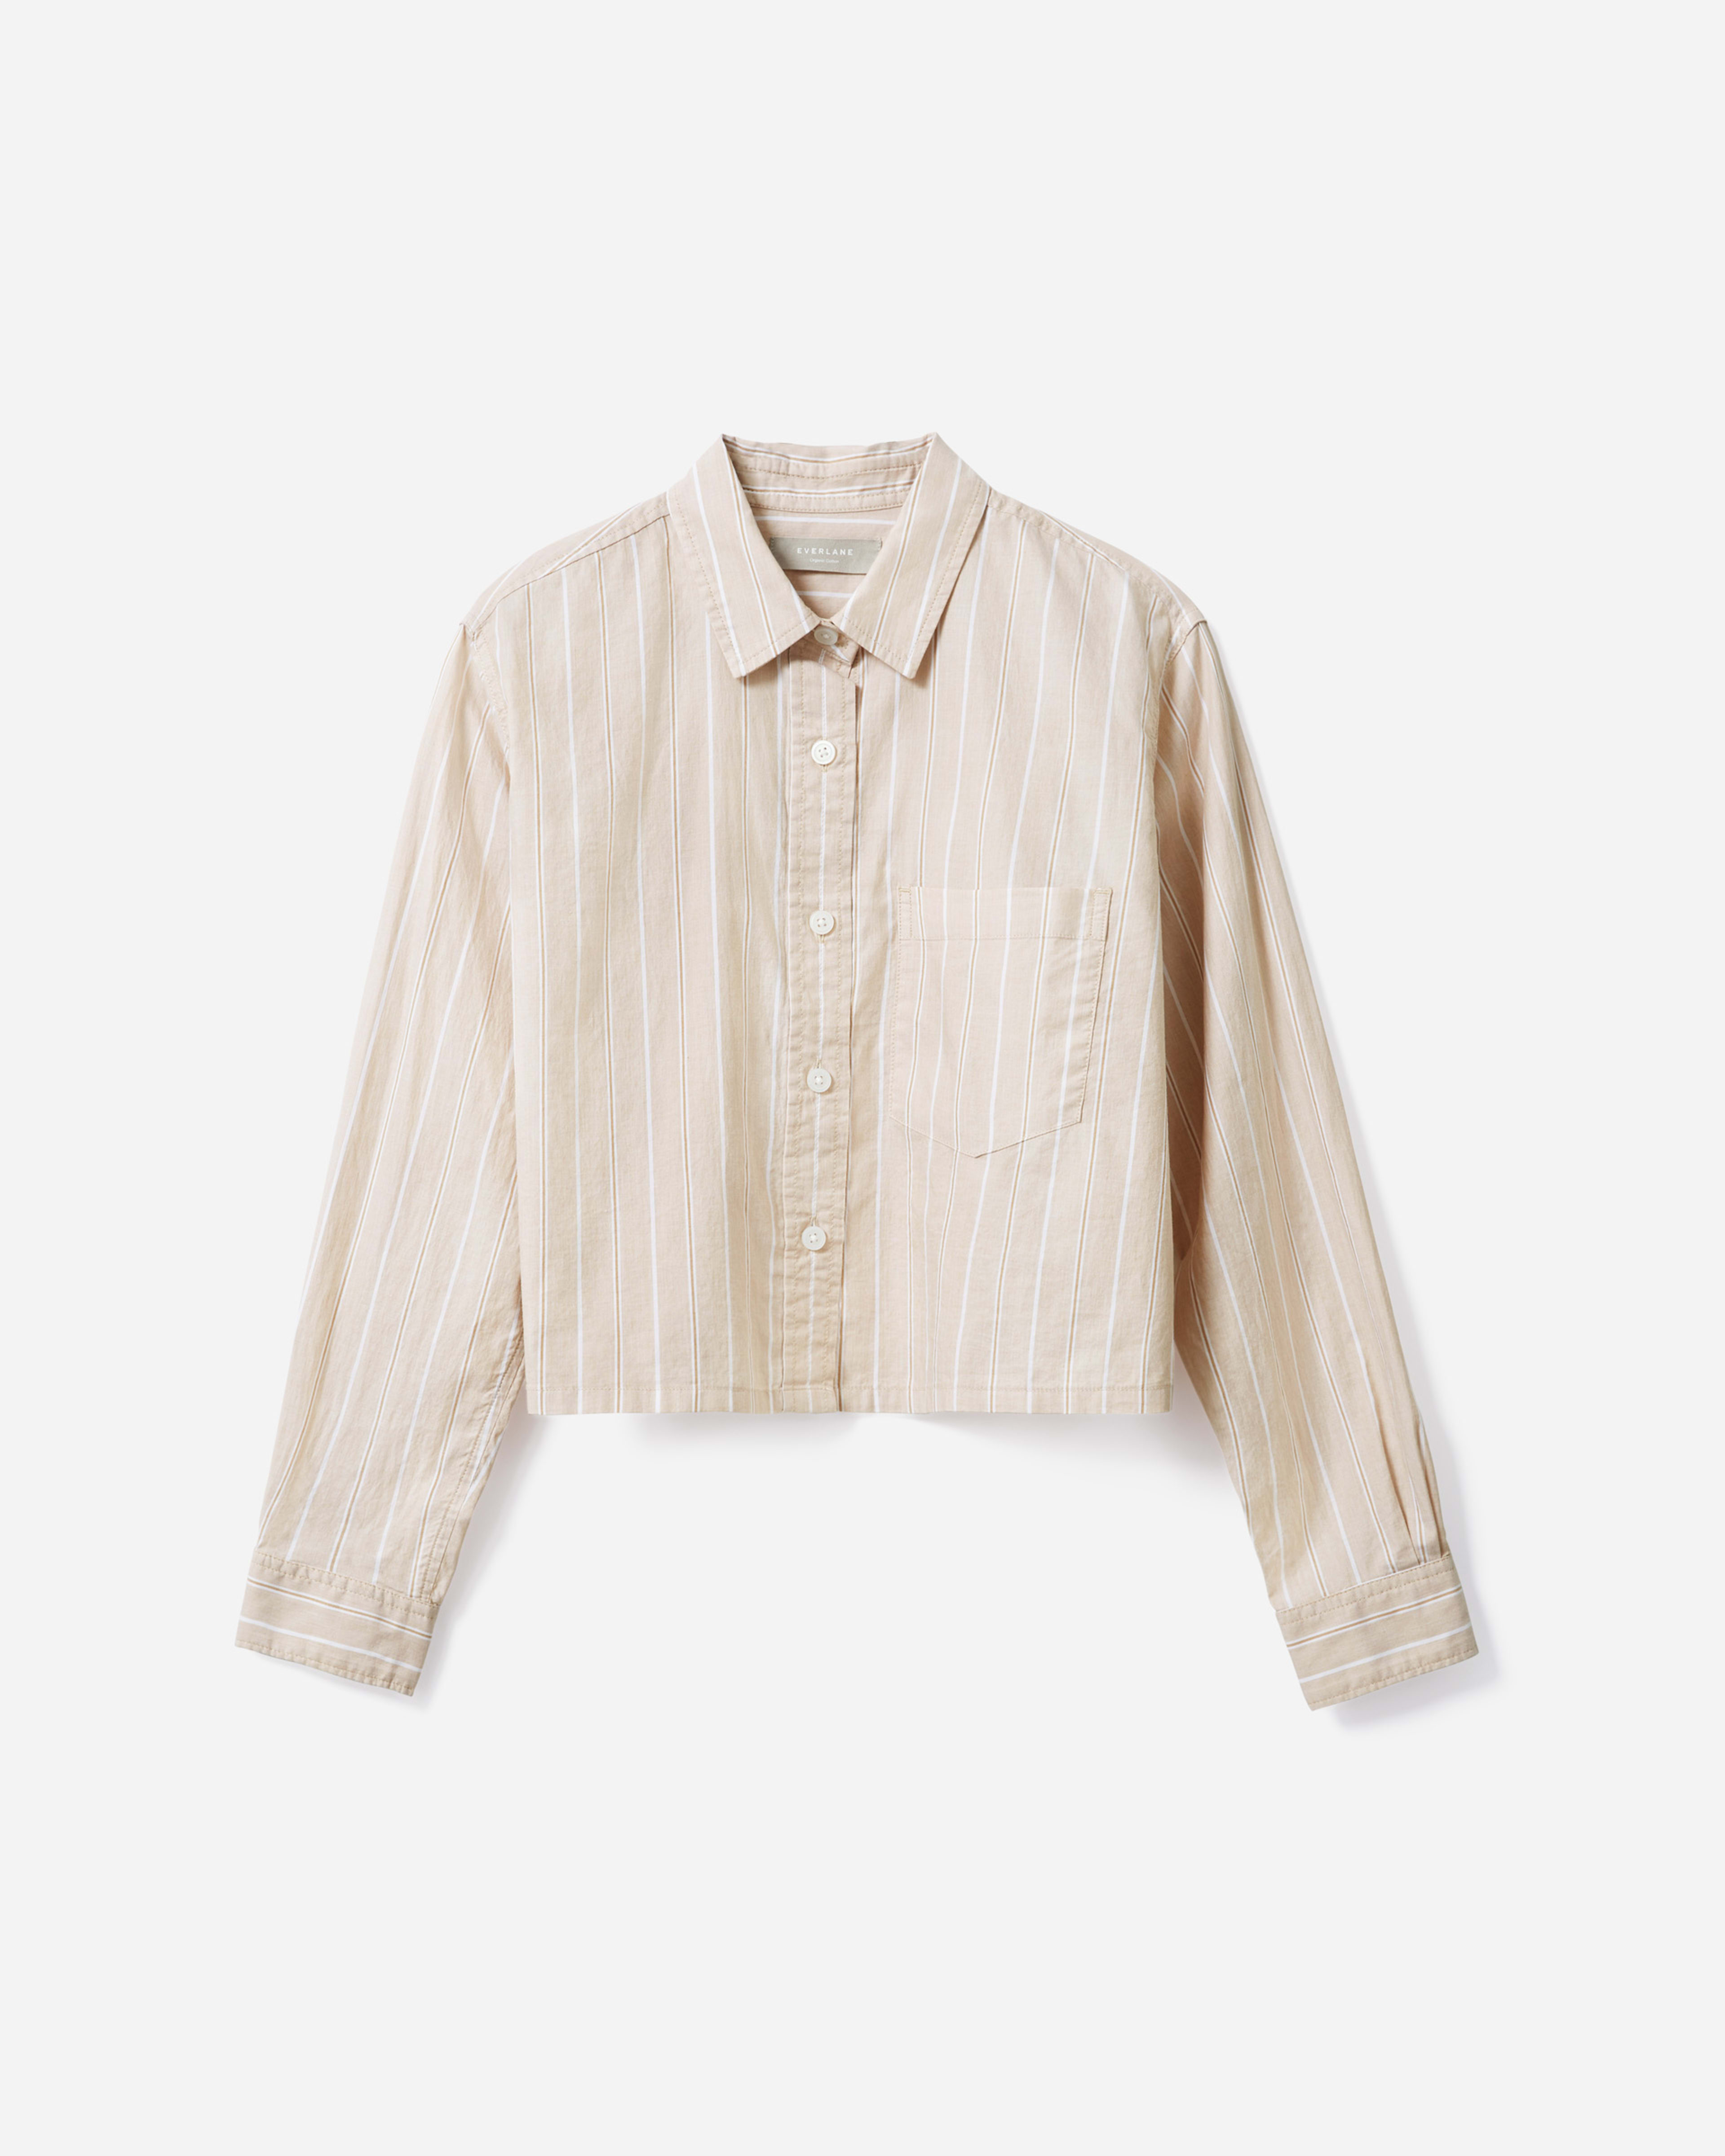 The Silky Cotton Way-Short Shirt Golden Brown / White – Everlane